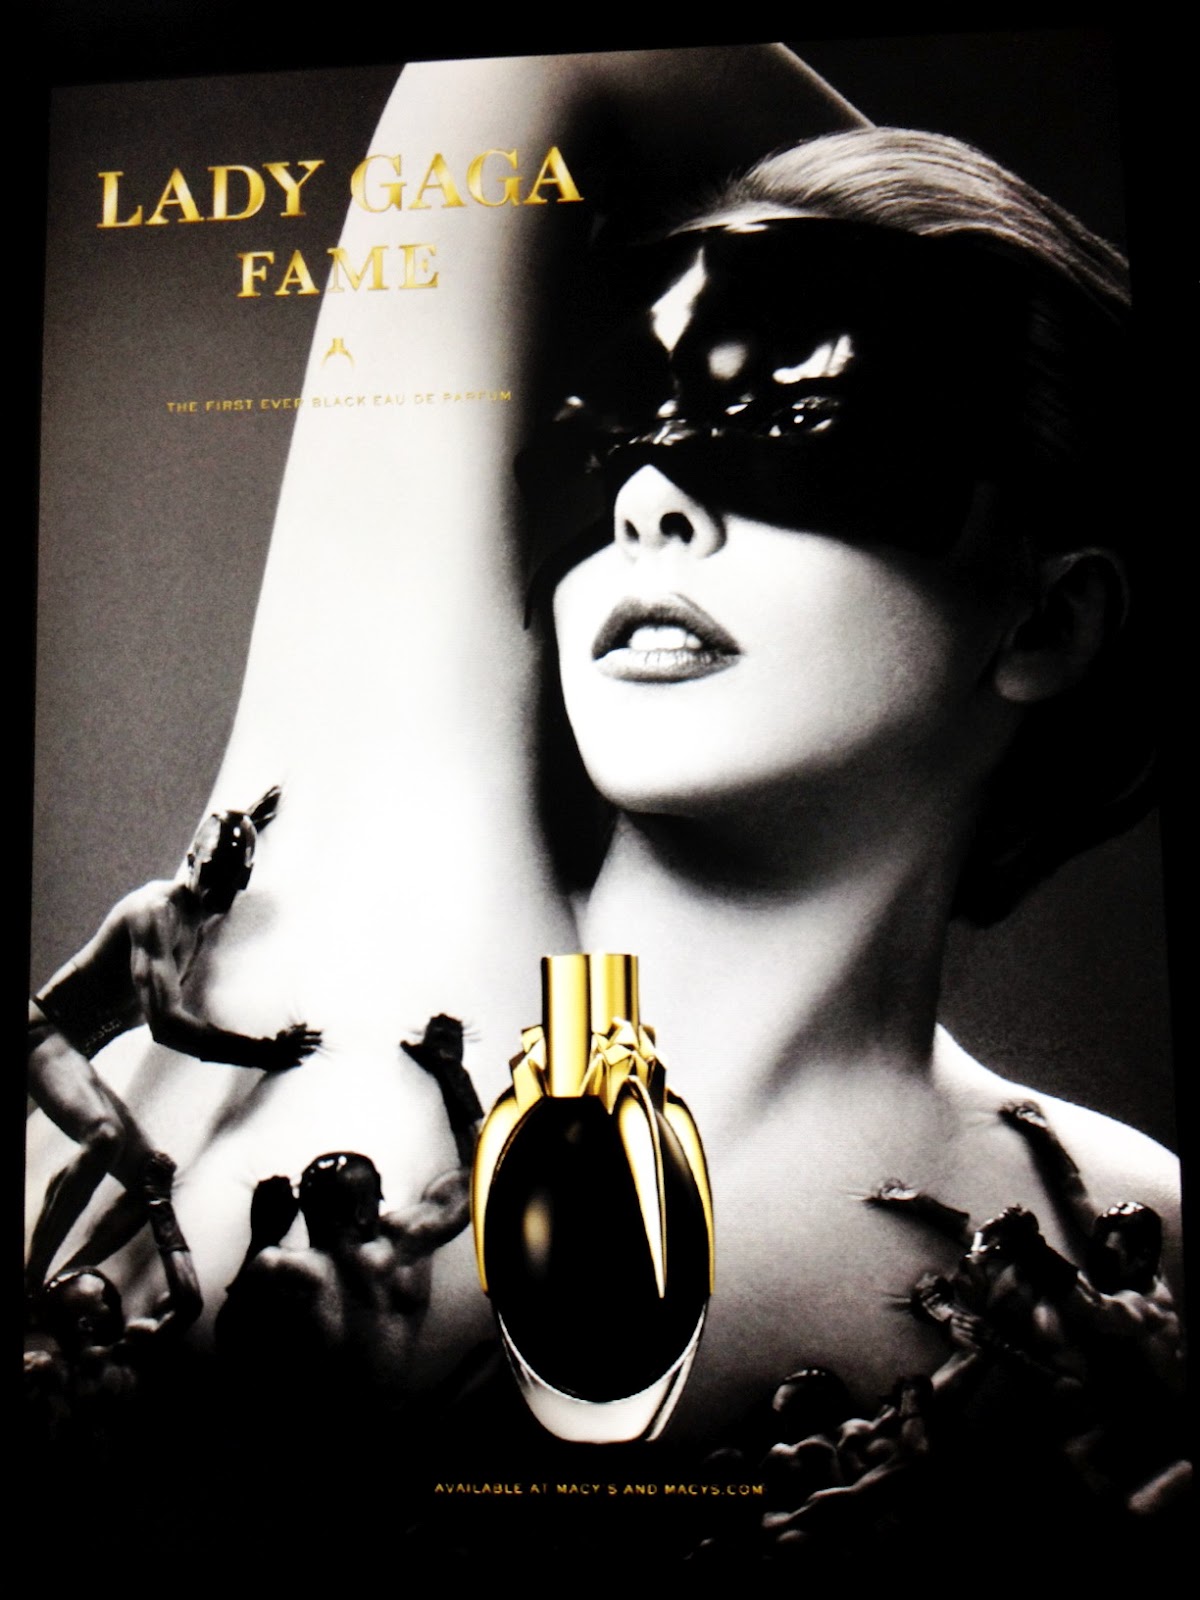 http://2.bp.blogspot.com/-aEGTKY_LC34/UCx_-NJ5qtI/AAAAAAAAARA/Ci9g0bk0FLo/s1600/lady+gaga+new+black+perfume+fame+post+by+cynthia+rudiyanto_exposure.JPG